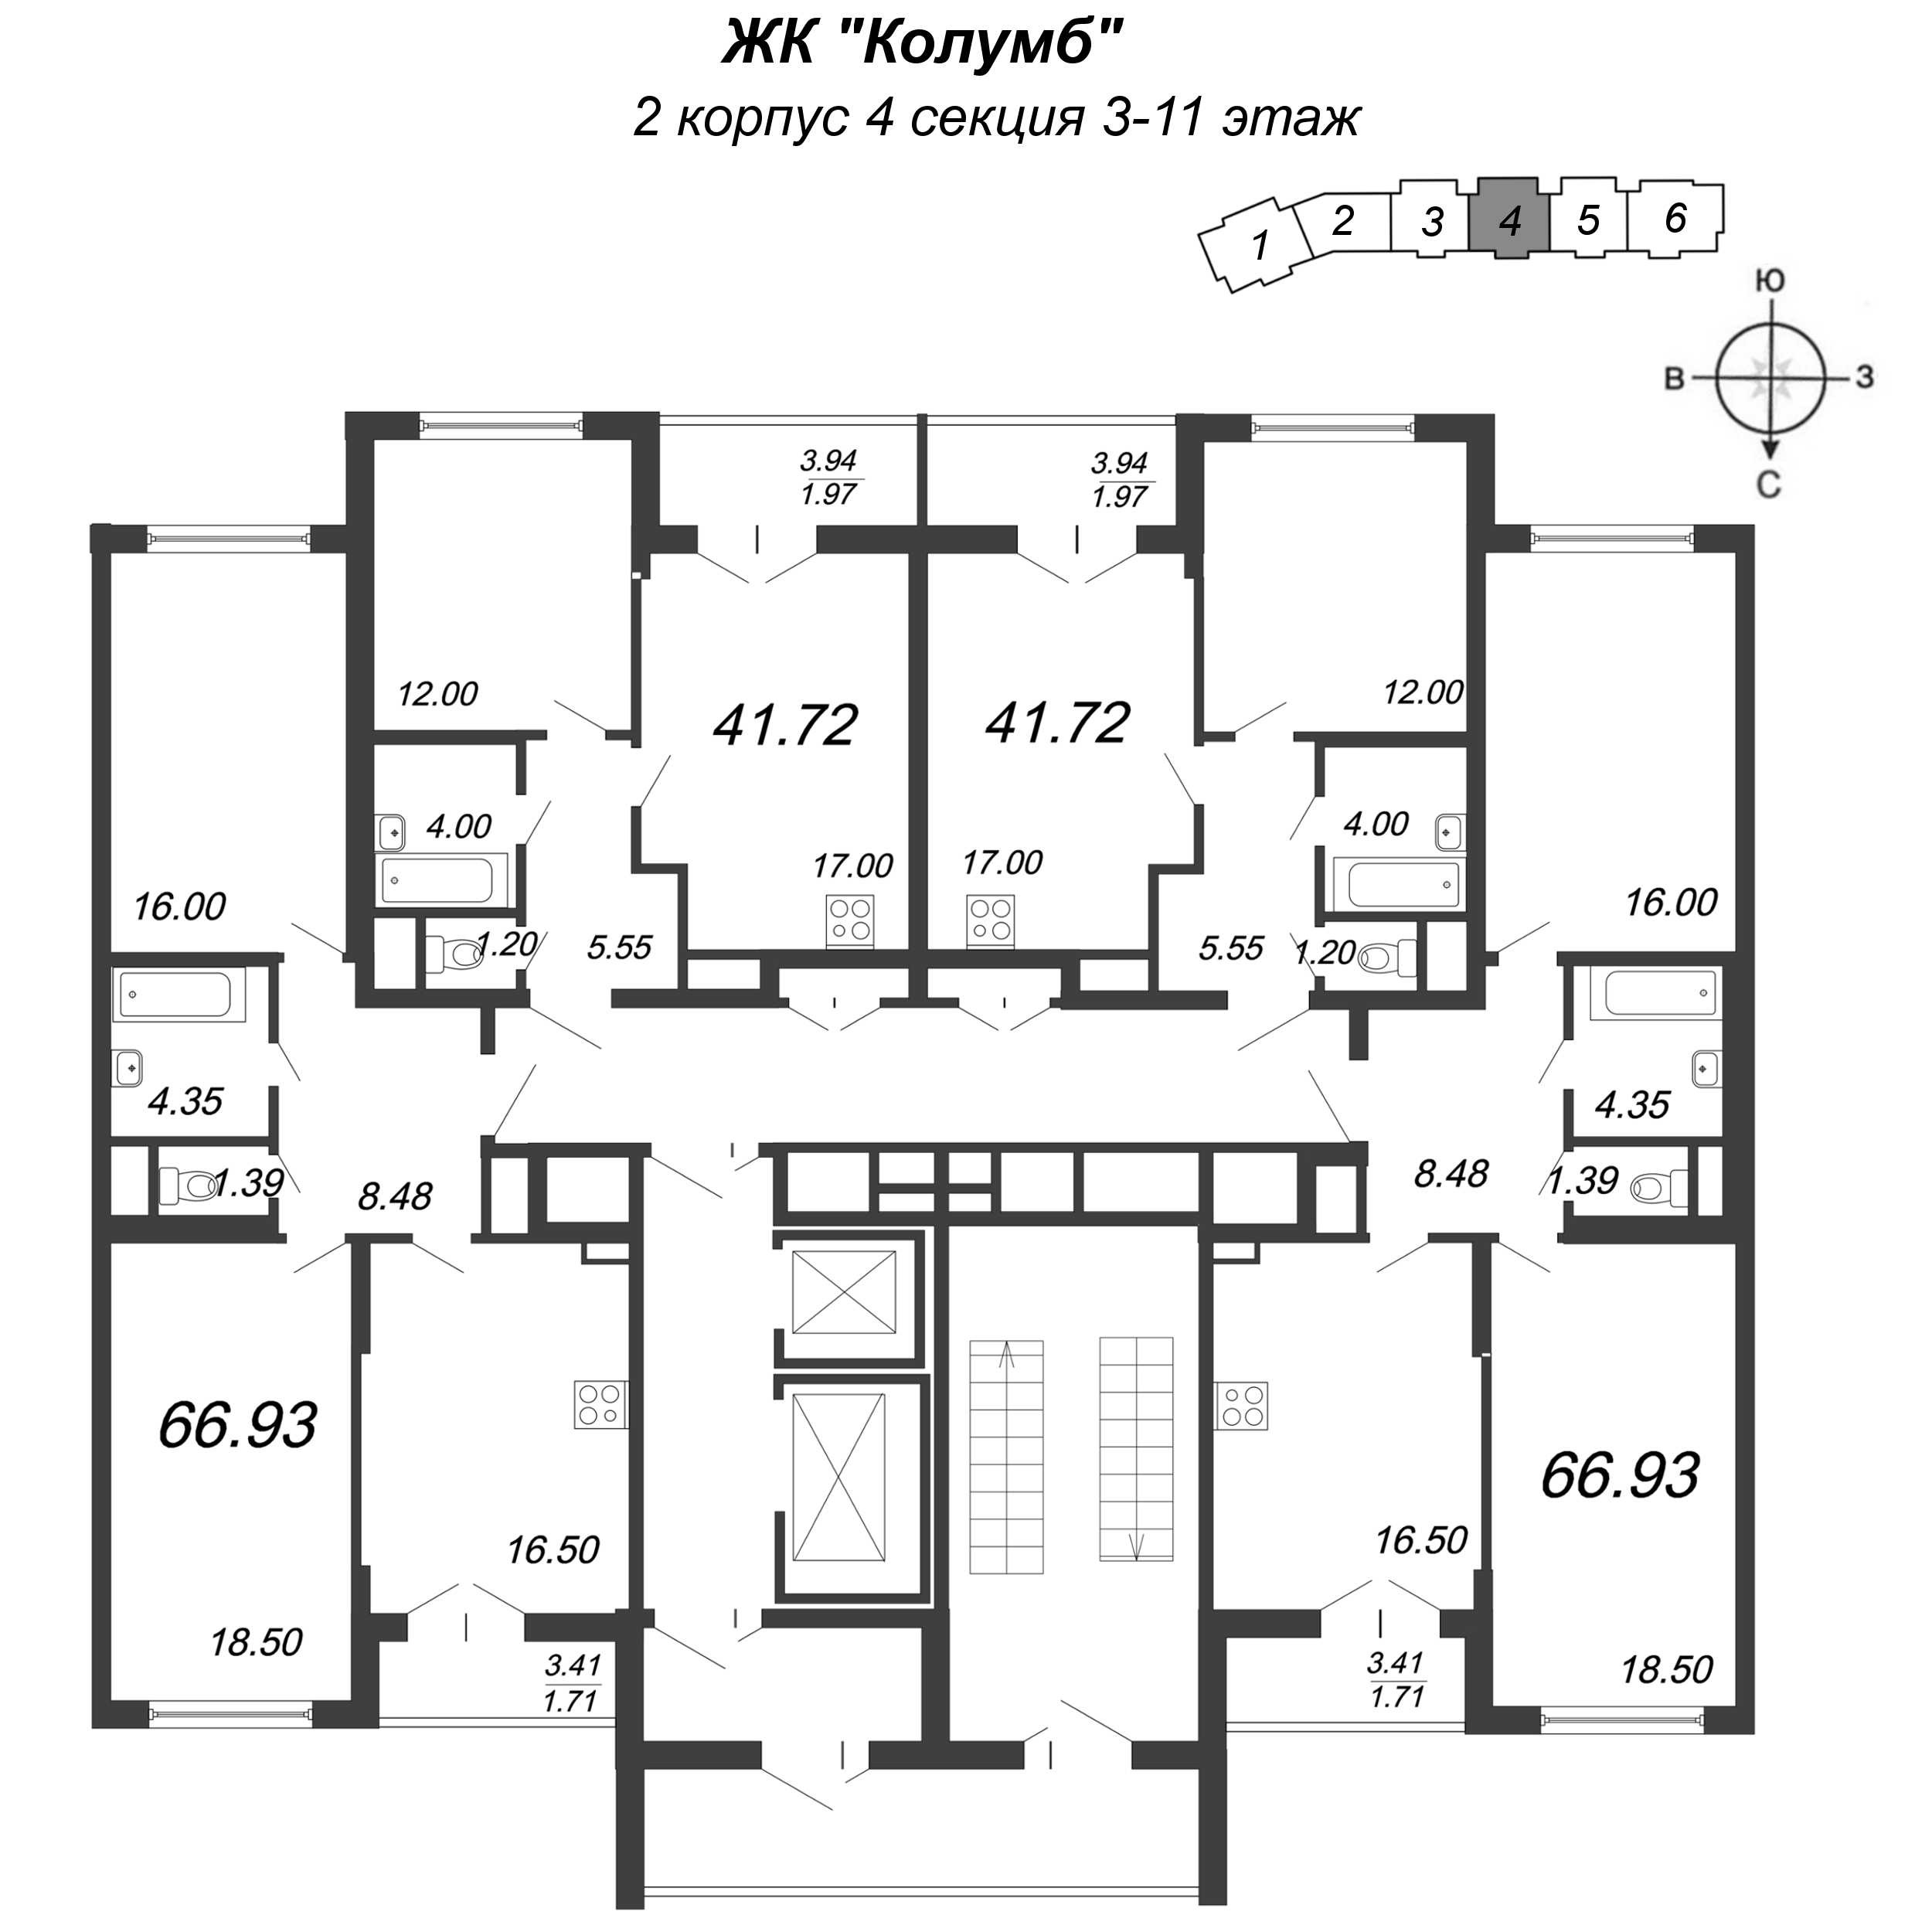 3-комнатная (Евро) квартира, 68.3 м² - планировка этажа